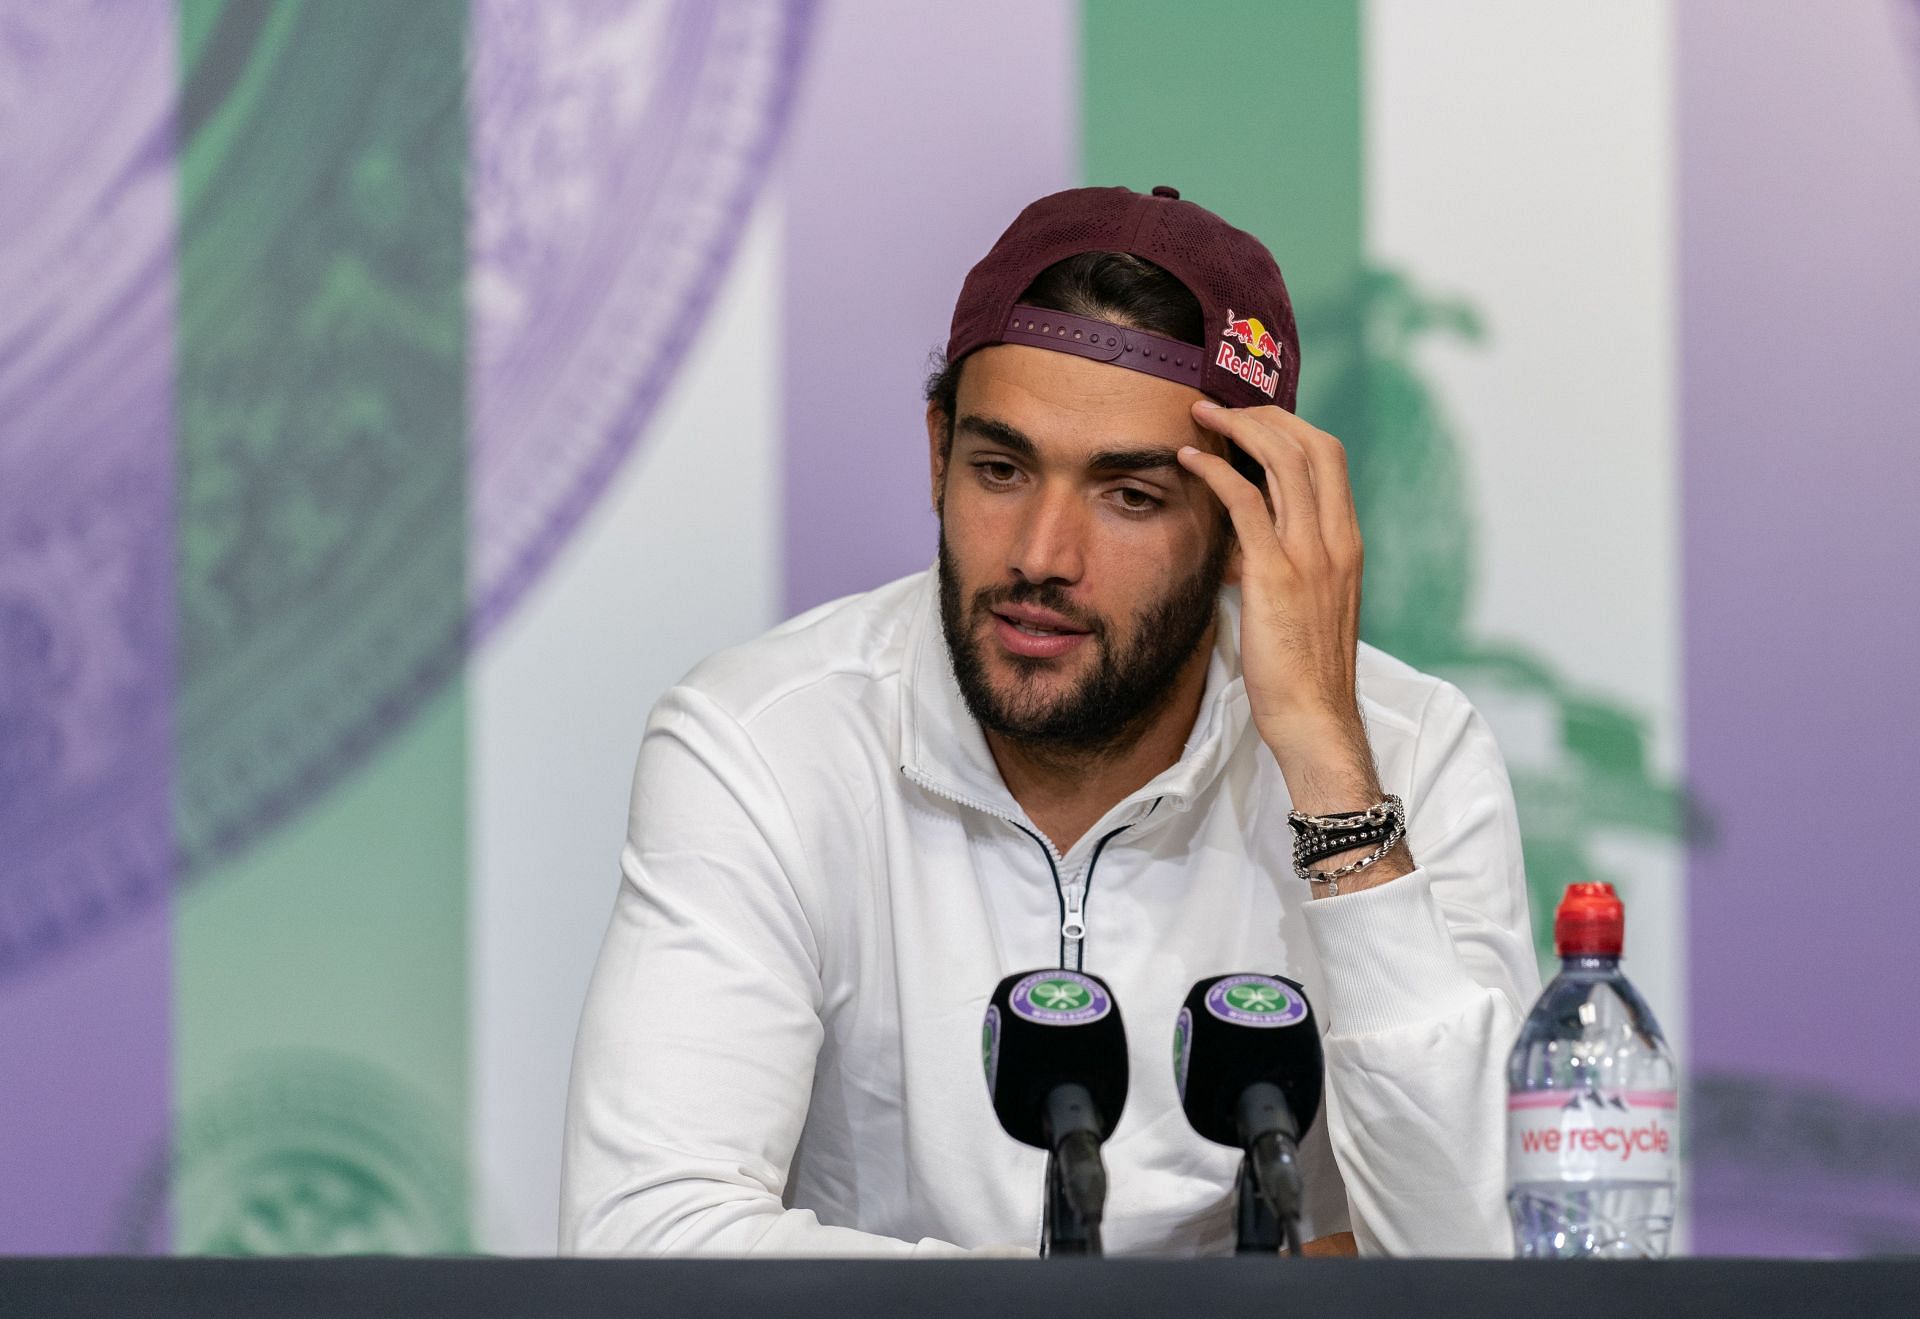 Matteo Berrettini at a press conference in the 2021 Wimbledon.